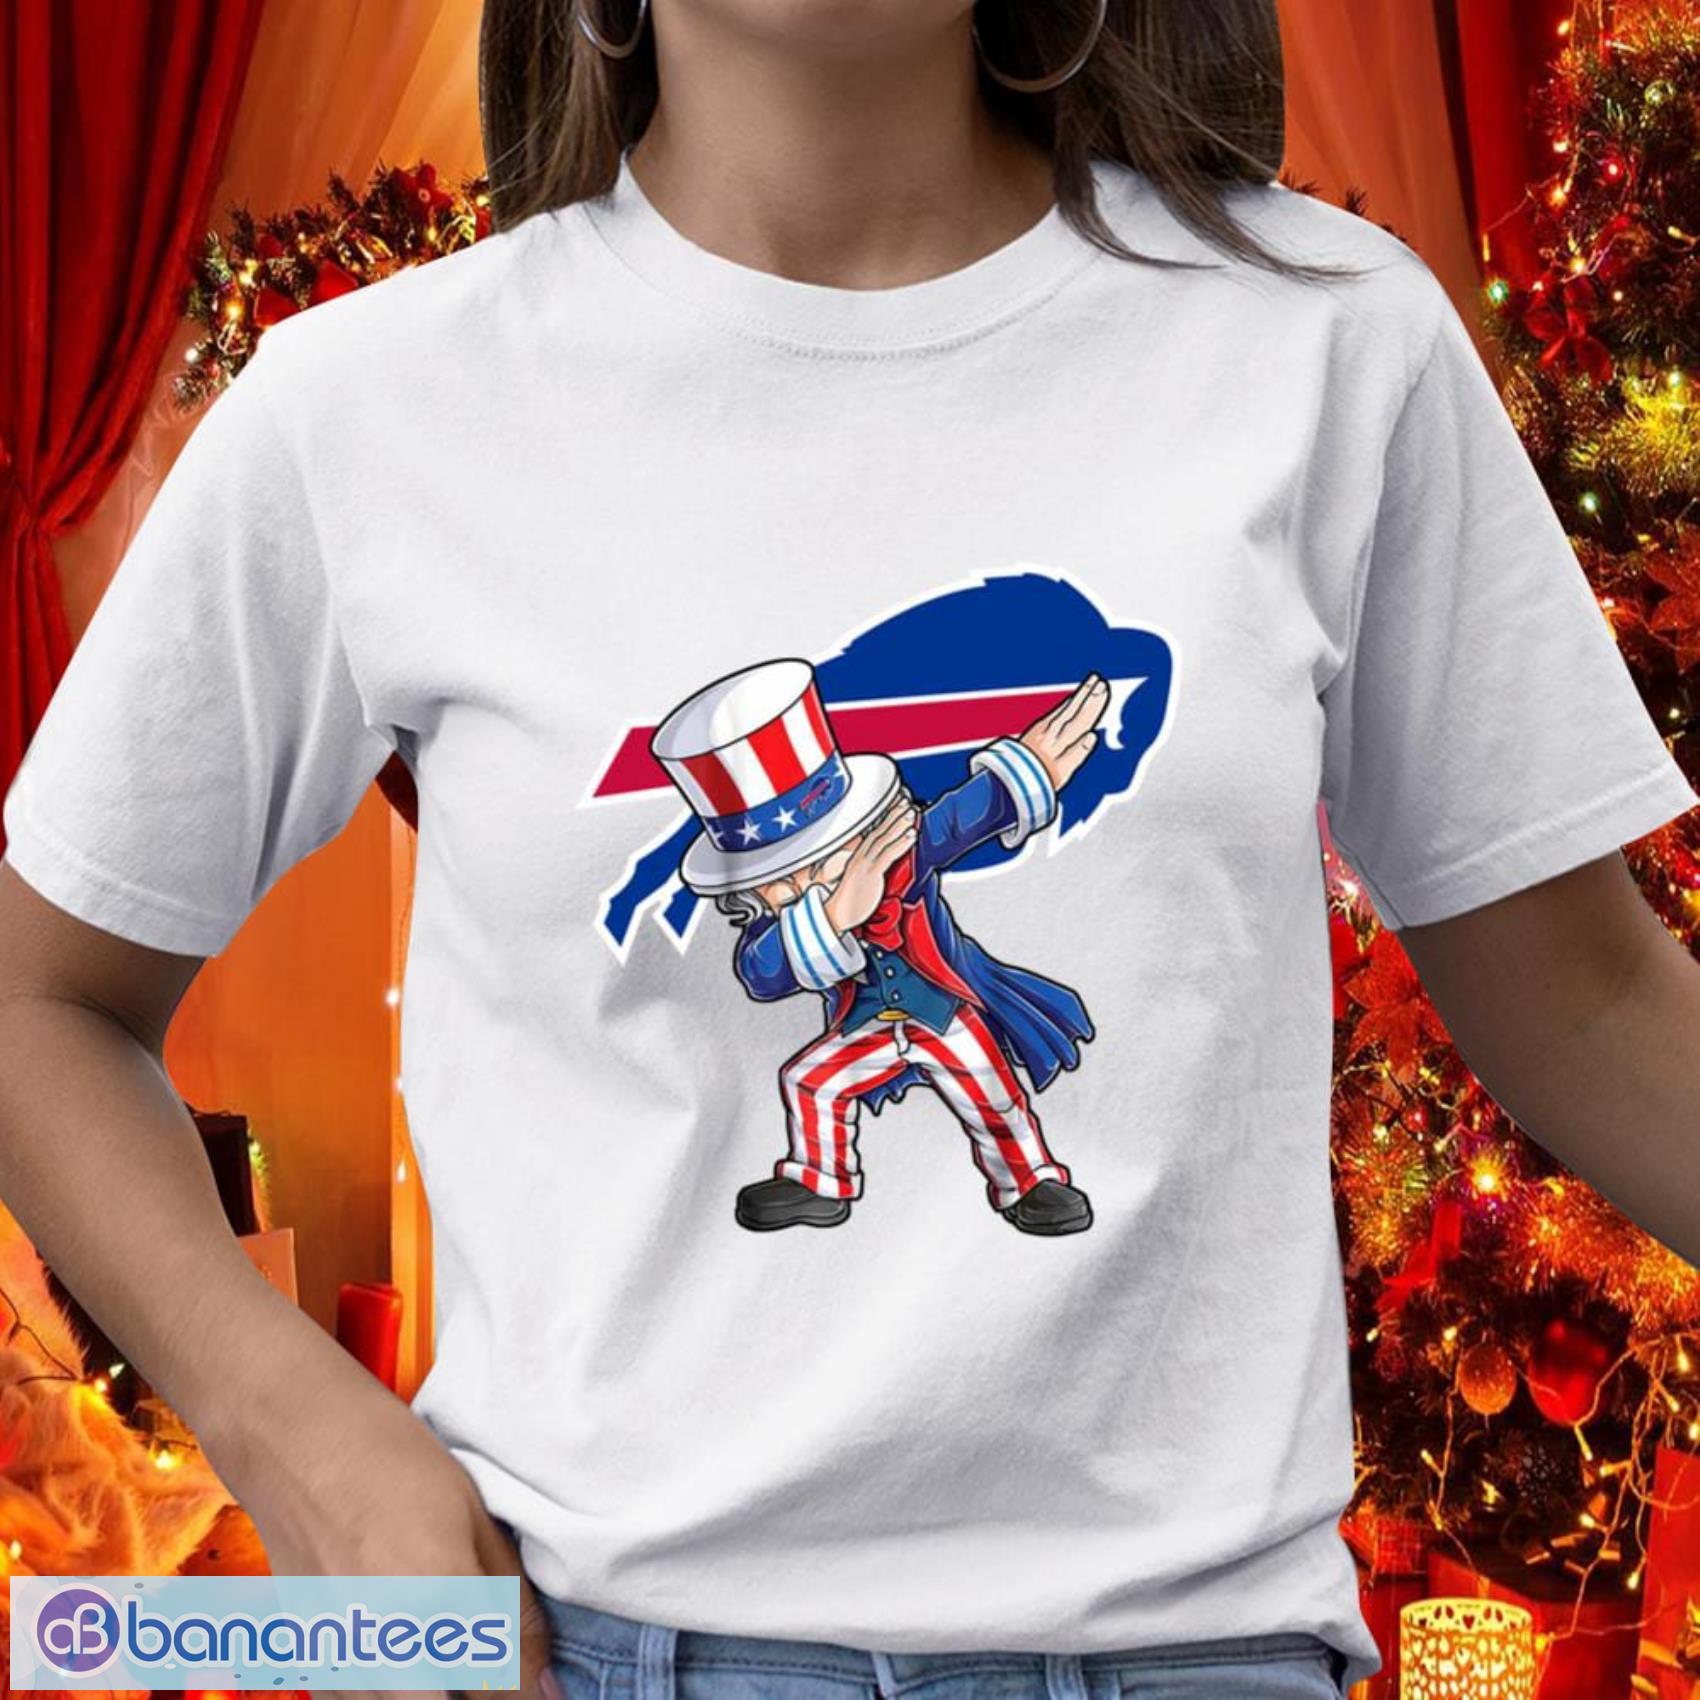 Buffalo Bills NFL Football Gift Fr Fans Dabbing Uncle Sam The Fourth of July T Shirt - Buffalo Bills NFL Football Dabbing Uncle Sam The Fourth of July T Shirt_1